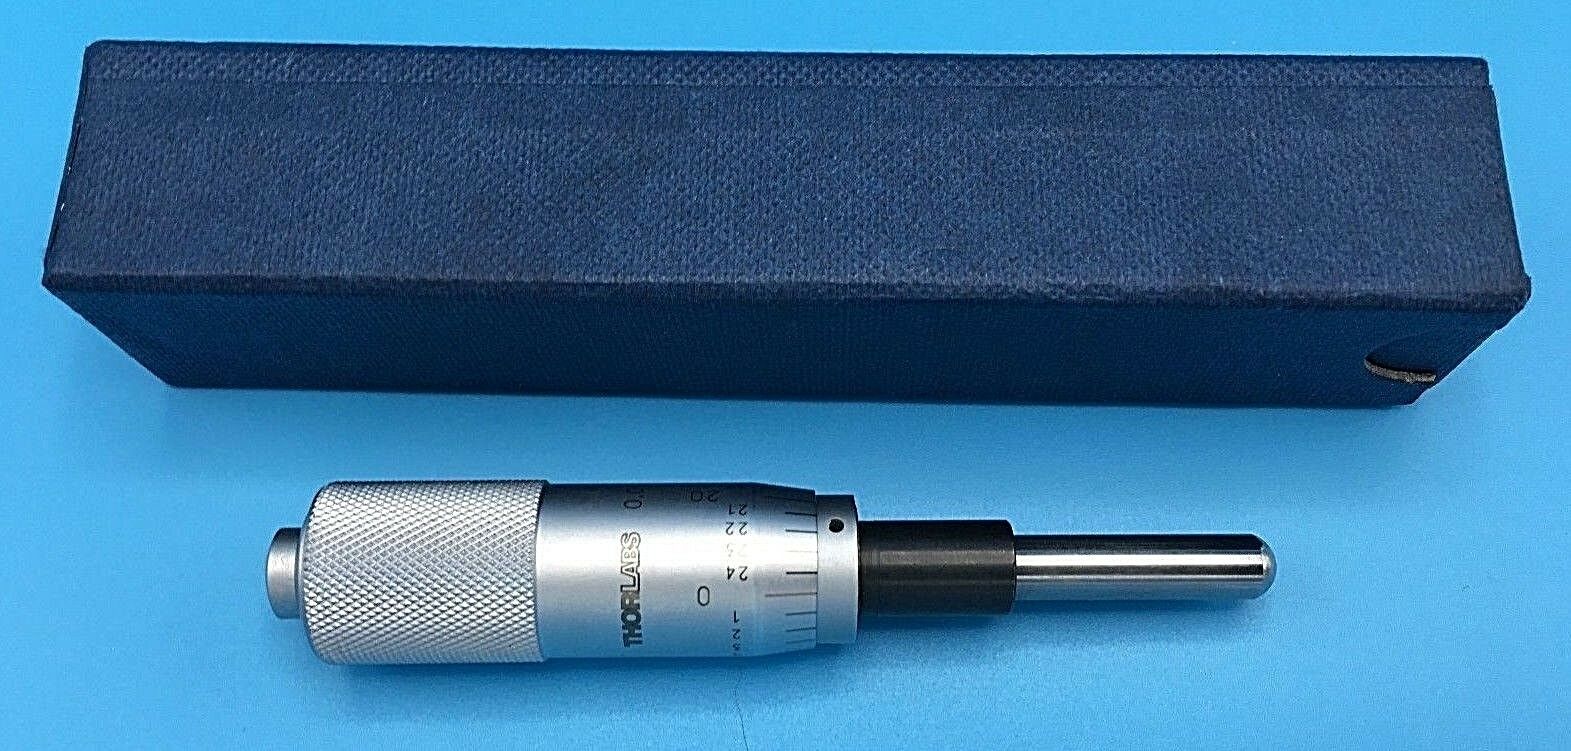 Thorlabs 1" (25mm) Micrometer Drive 150-811ST .001" Graduations